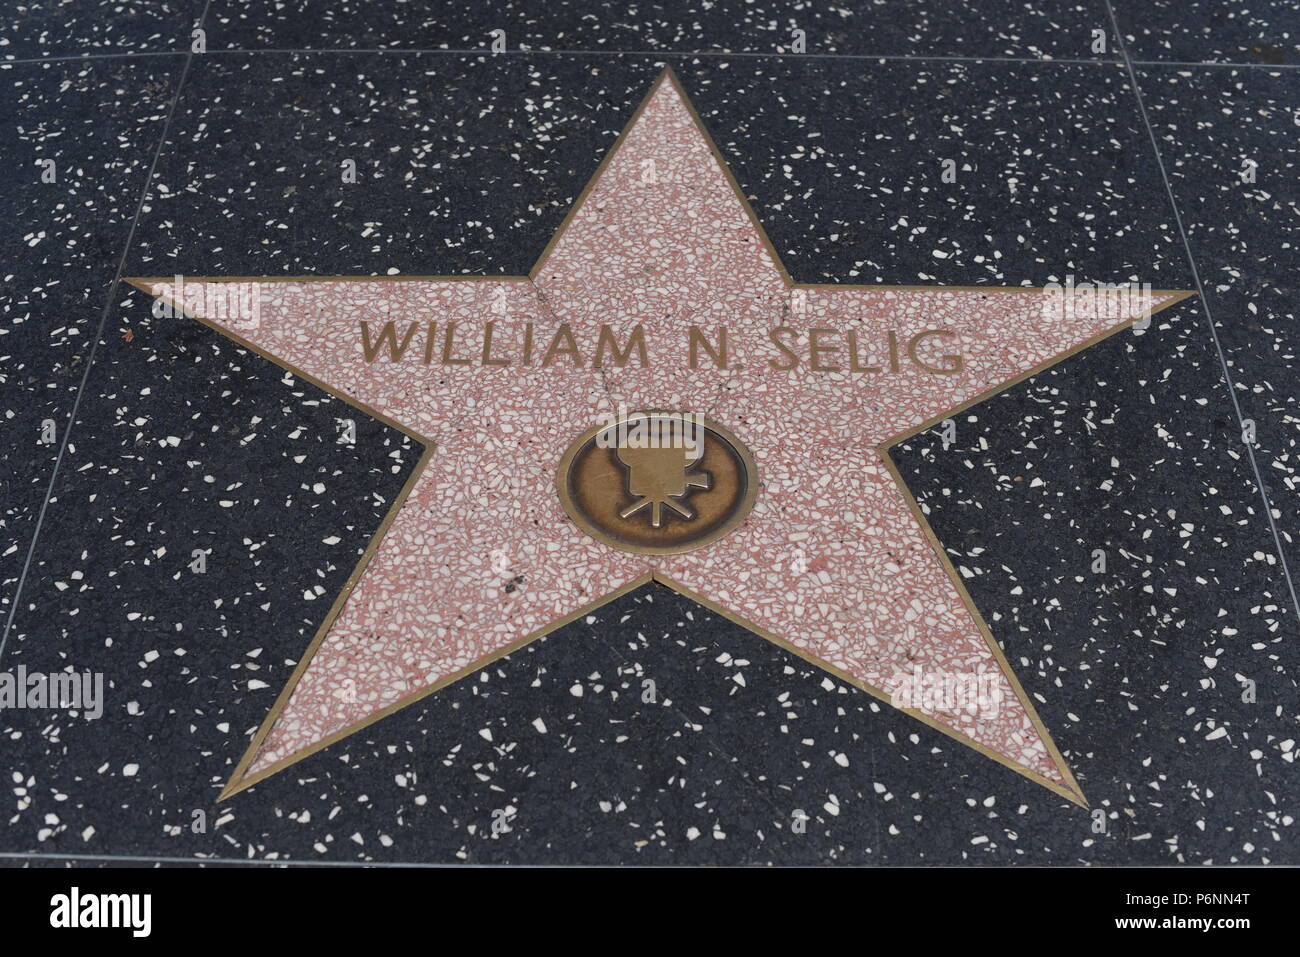 HOLLYWOOD, CA - 29 giugno: William N. Selig stella sulla Hollywood Walk of Fame in Hollywood, la California il 29 giugno 2018. Foto Stock